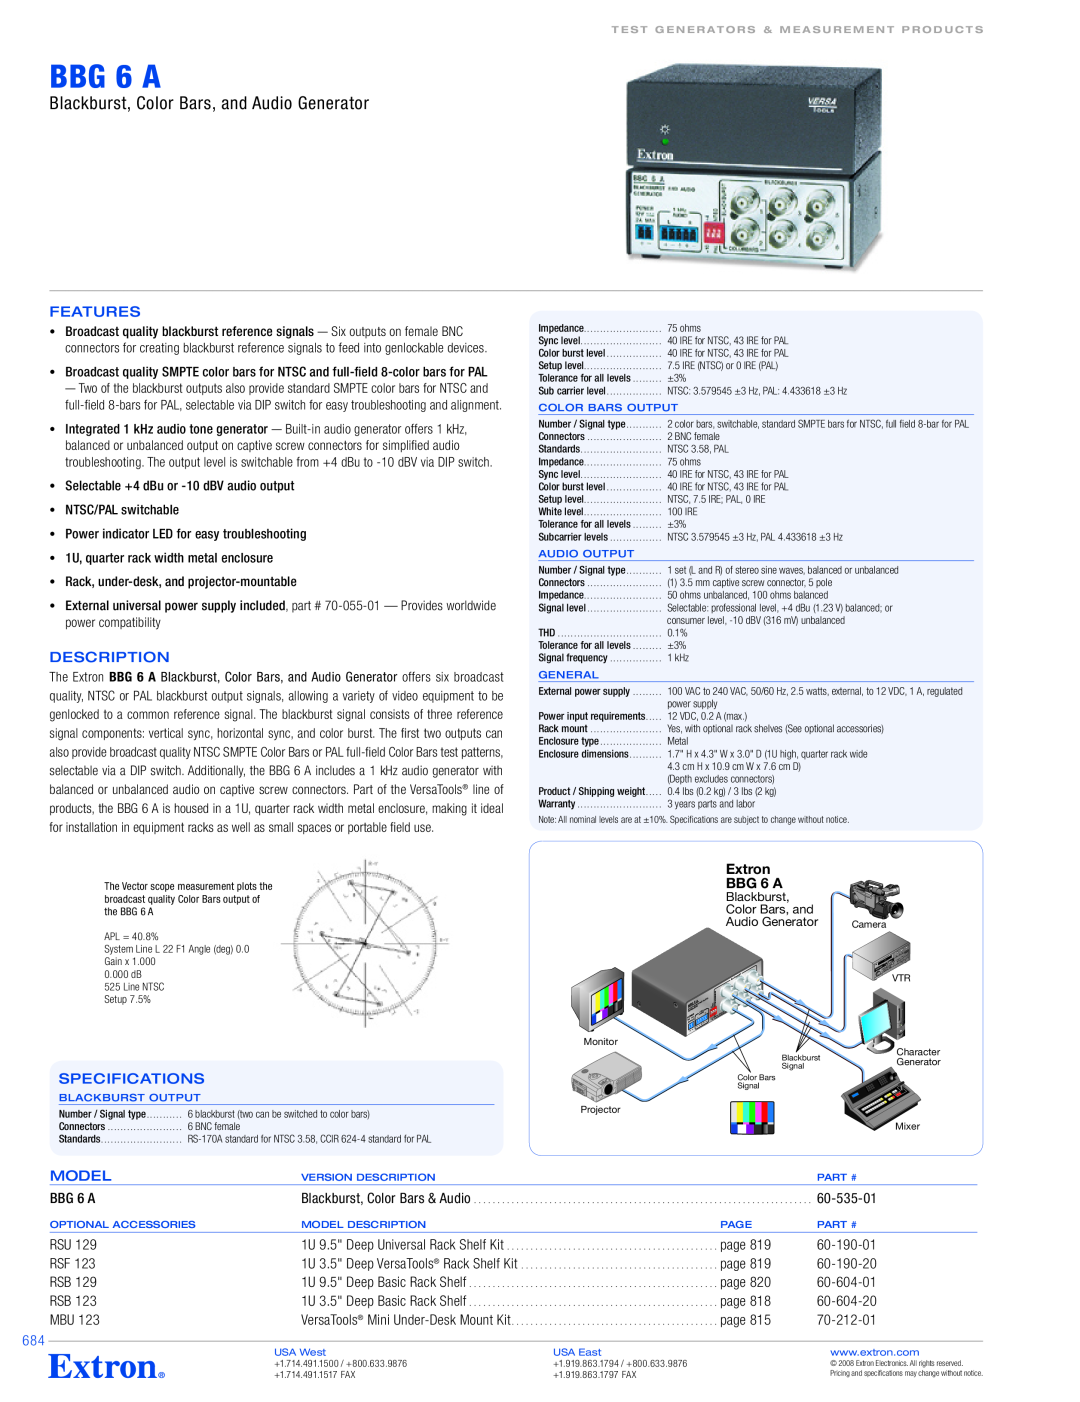 Extron electronic manual Blackburst / Color Bars / Audio Generator, BBG 6 A and BBG 6 A J, User’s Guide 